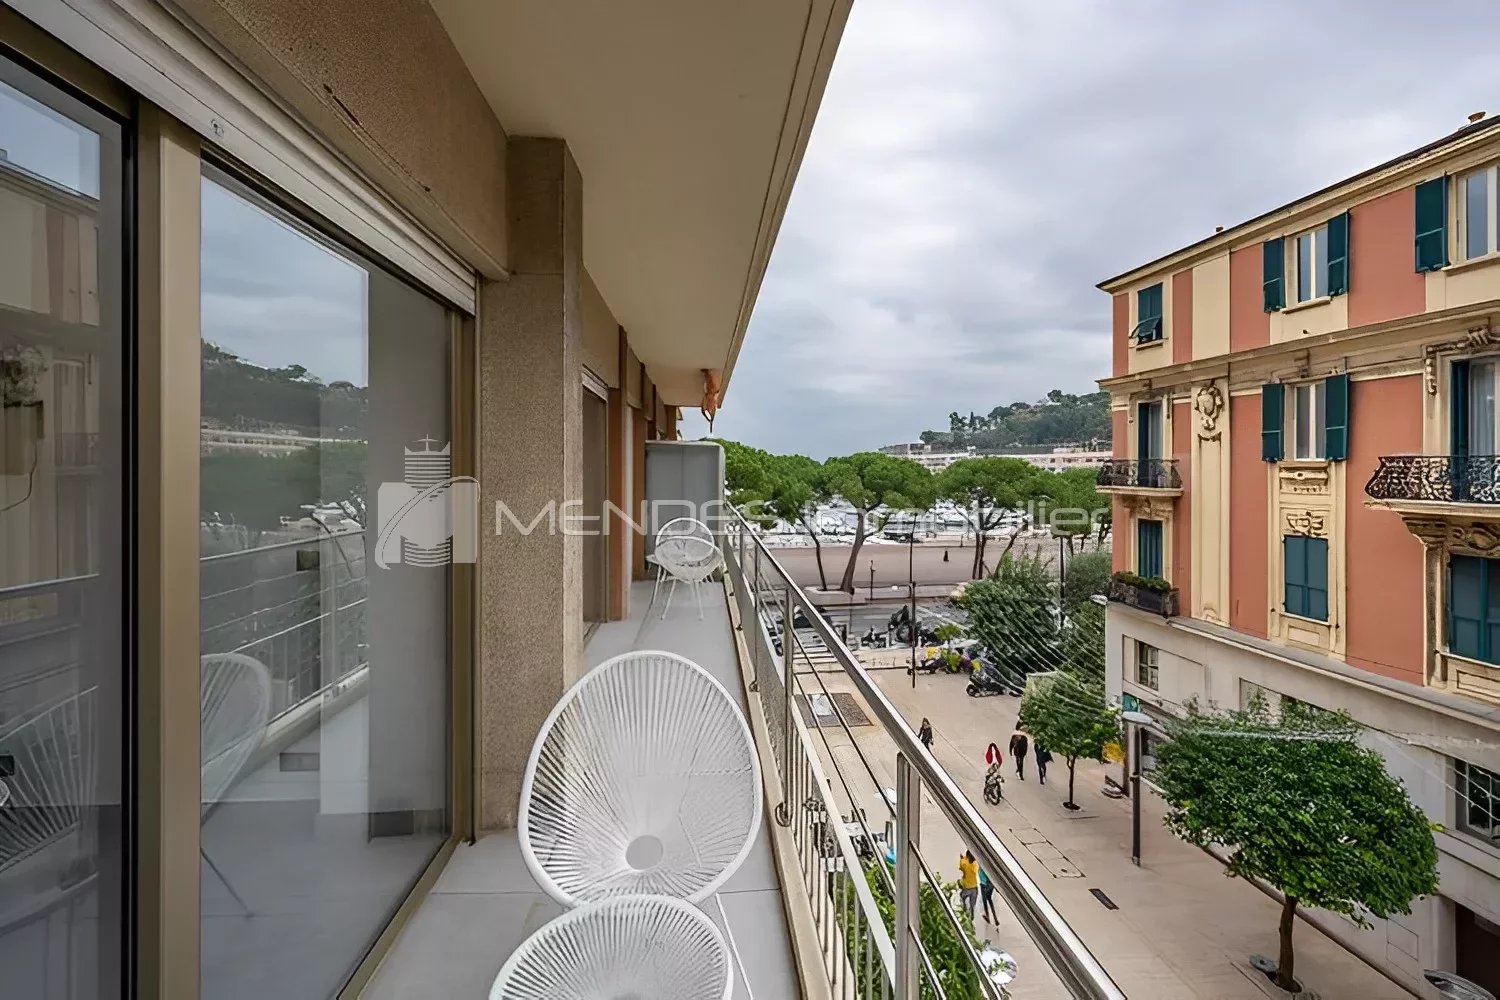 Sale Apartment - Monaco - Monaco